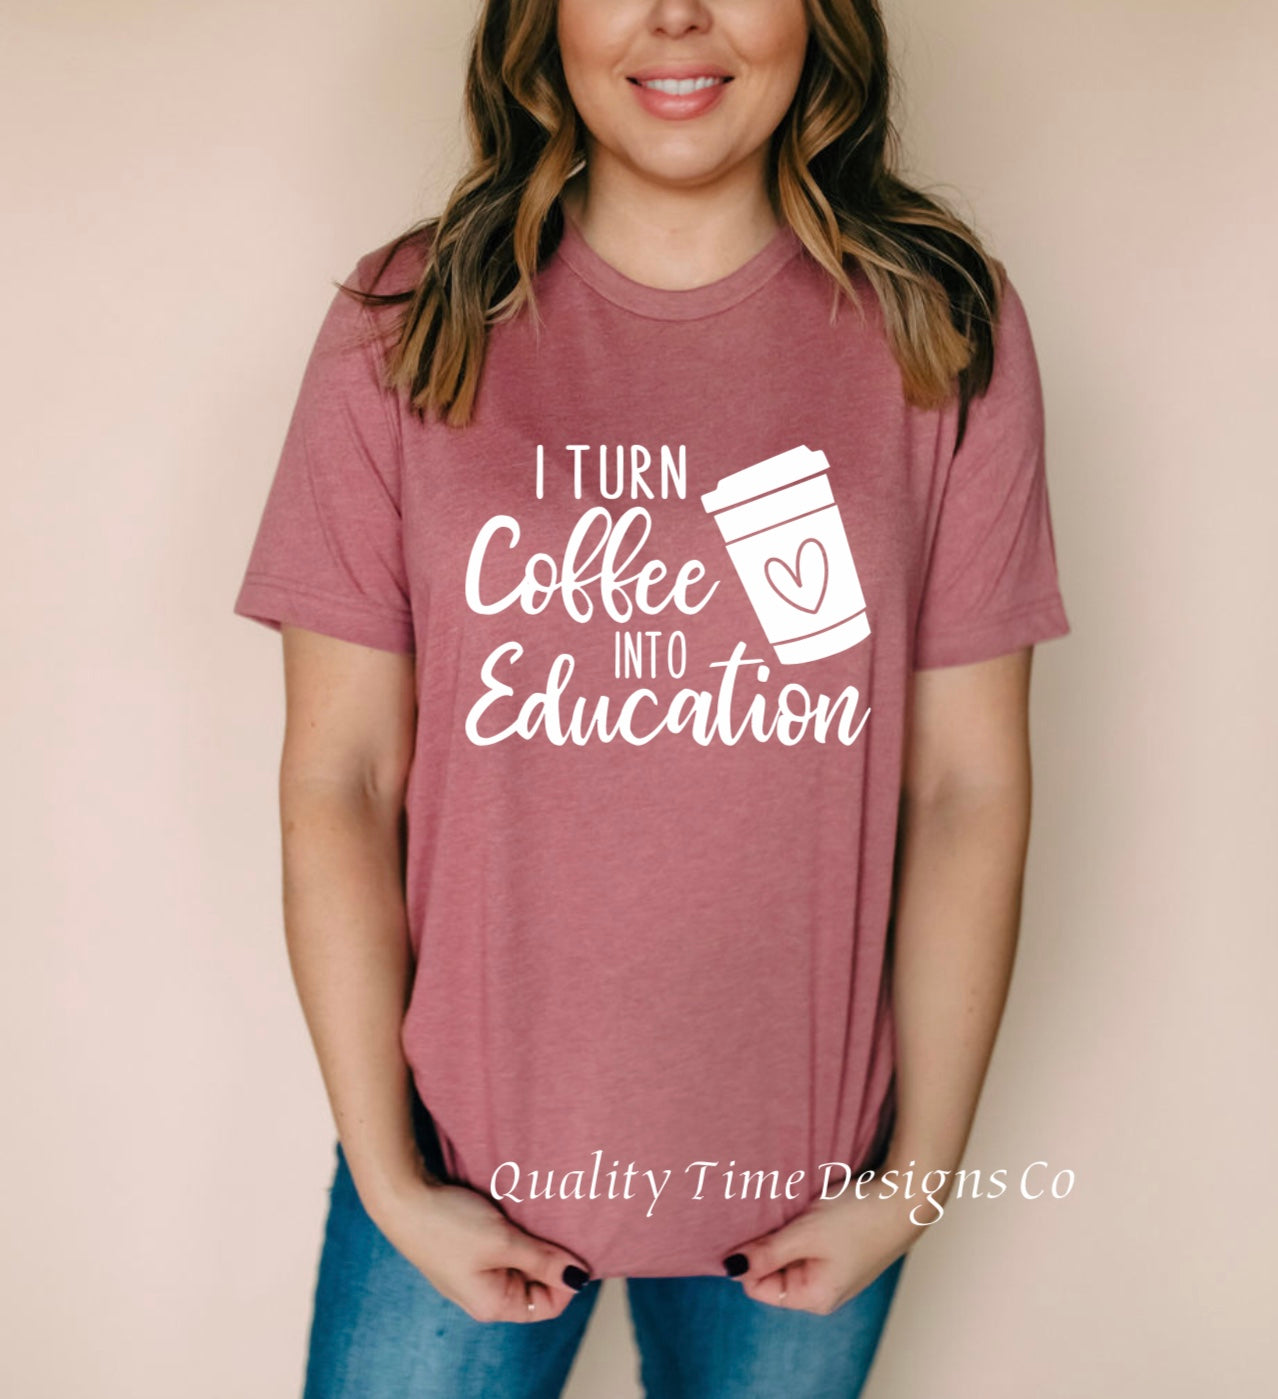 I turn coffee into education t shirt